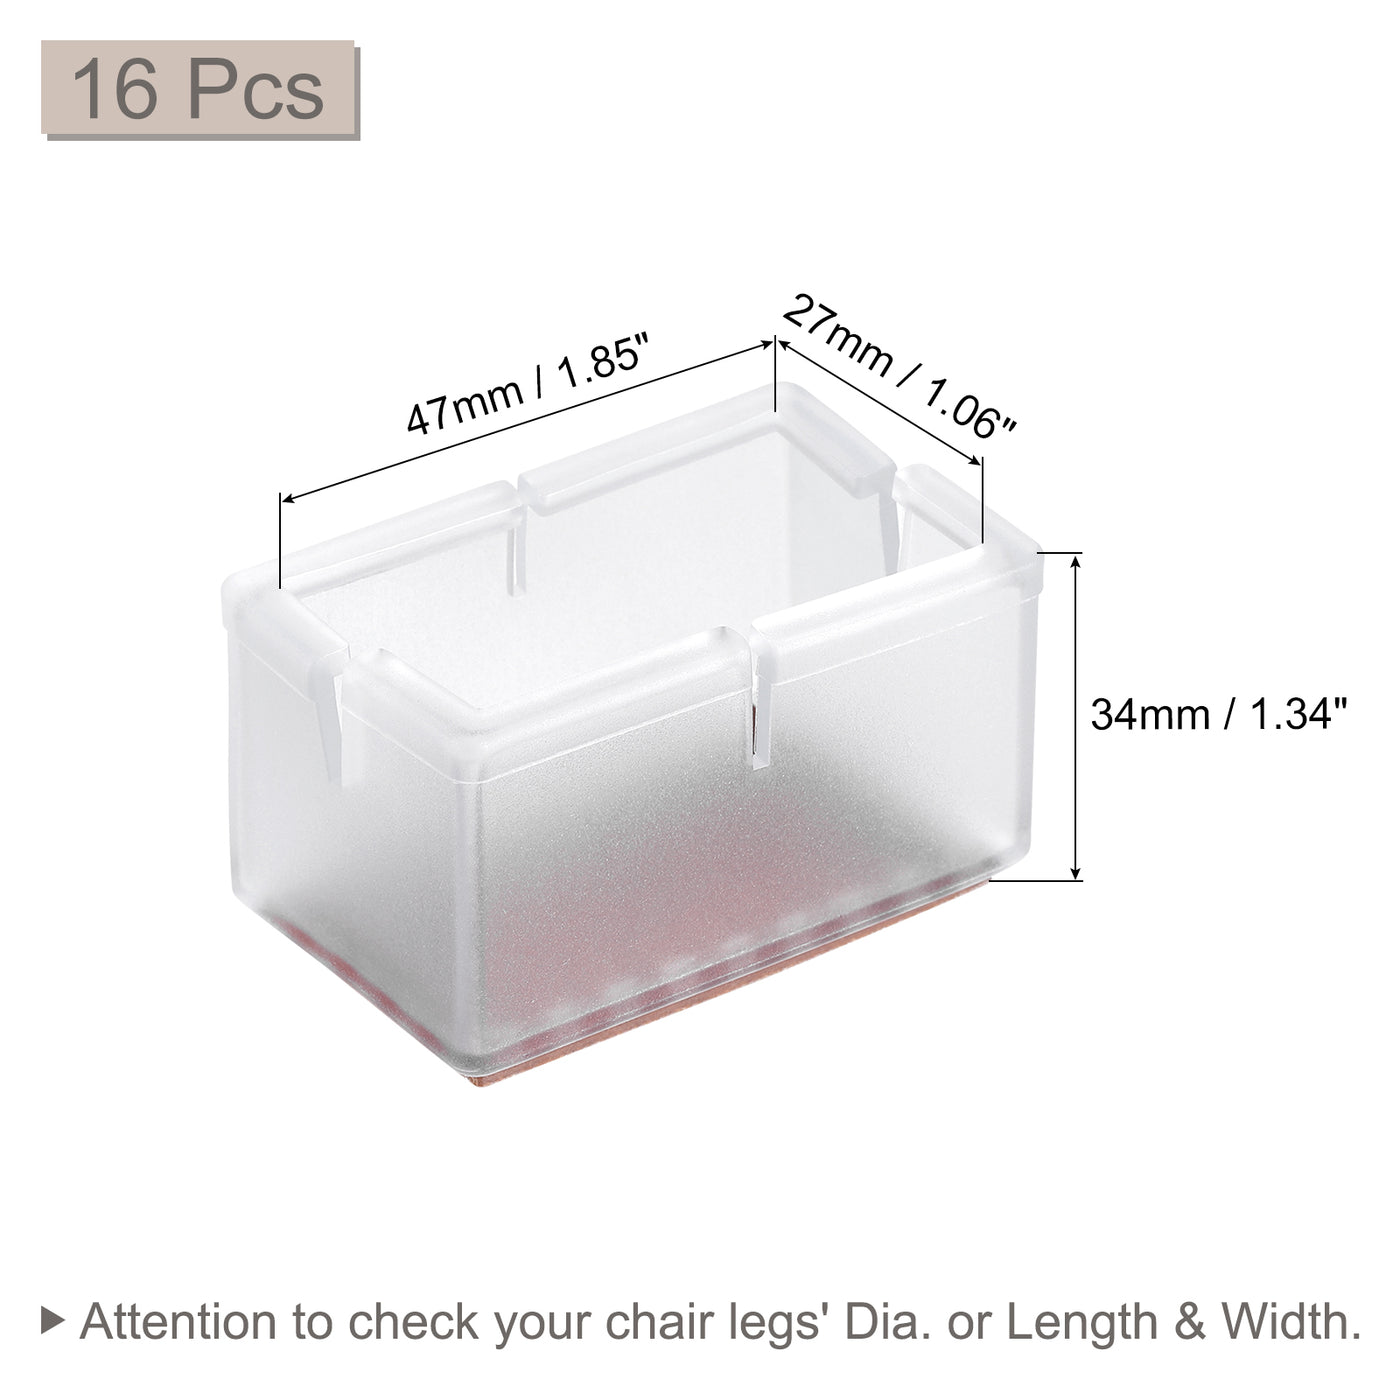 uxcell Uxcell Chair Leg Floor Protectors, 16Pcs 47mm(1.85") Rectangle PVC & Felt Chair Leg Cover Caps for Hardwood Floors (Clear White)